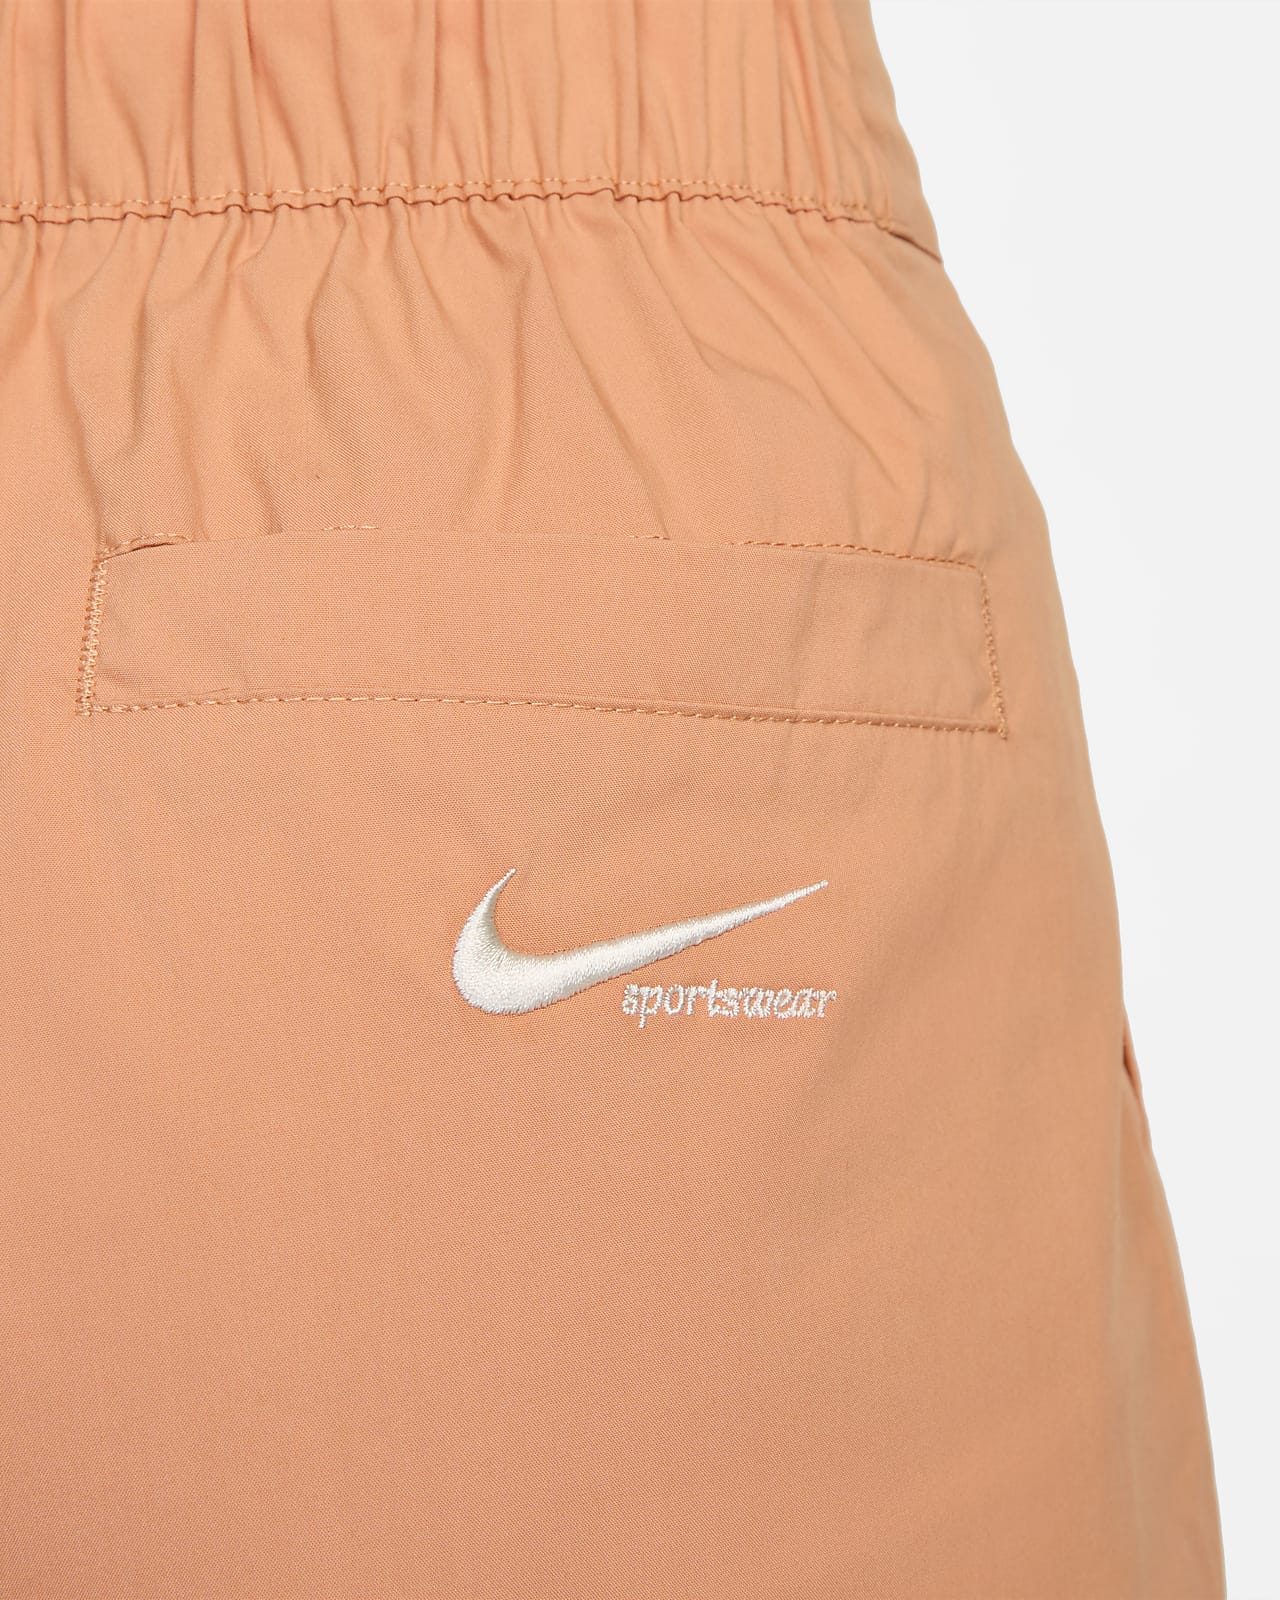 Pants de tejido Woven para mujer Nike Sportswear Collection